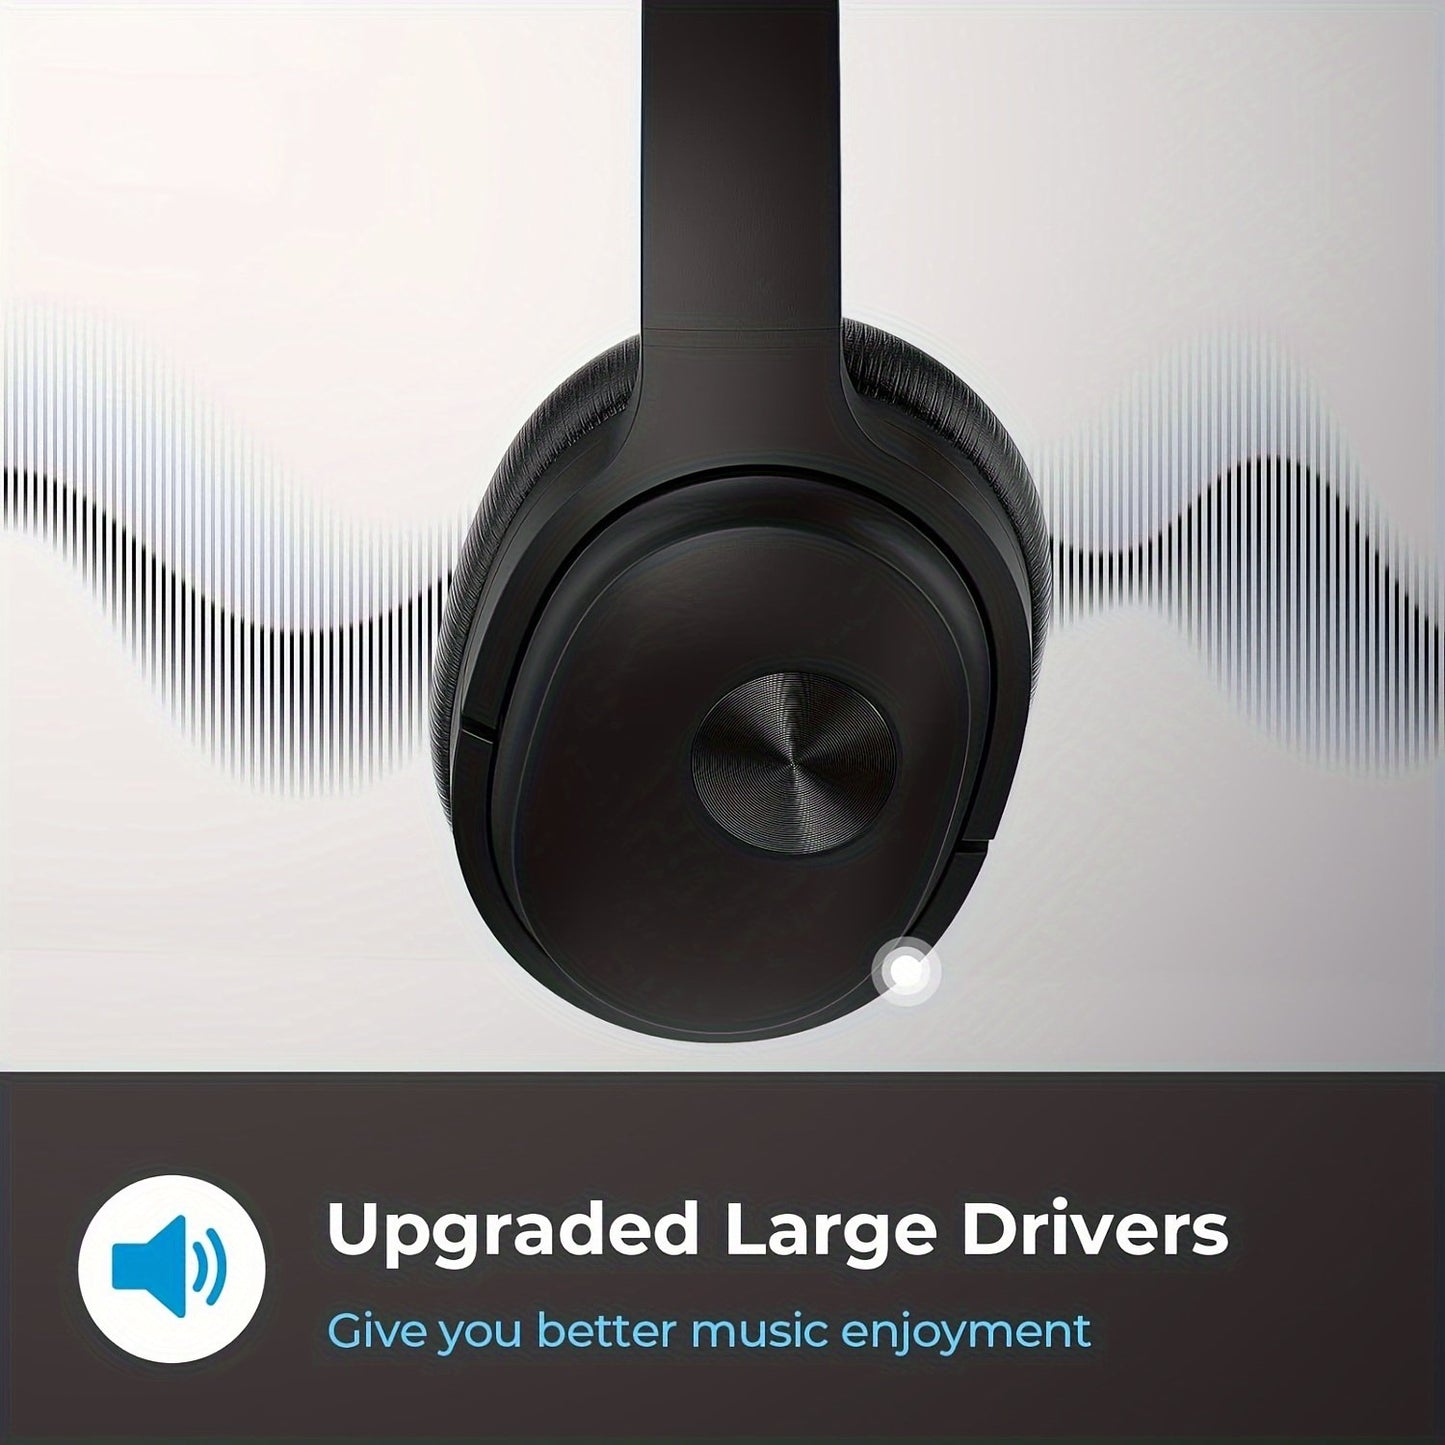 Hybrid Active Noise Cancelling Headphones Wireless Headphones